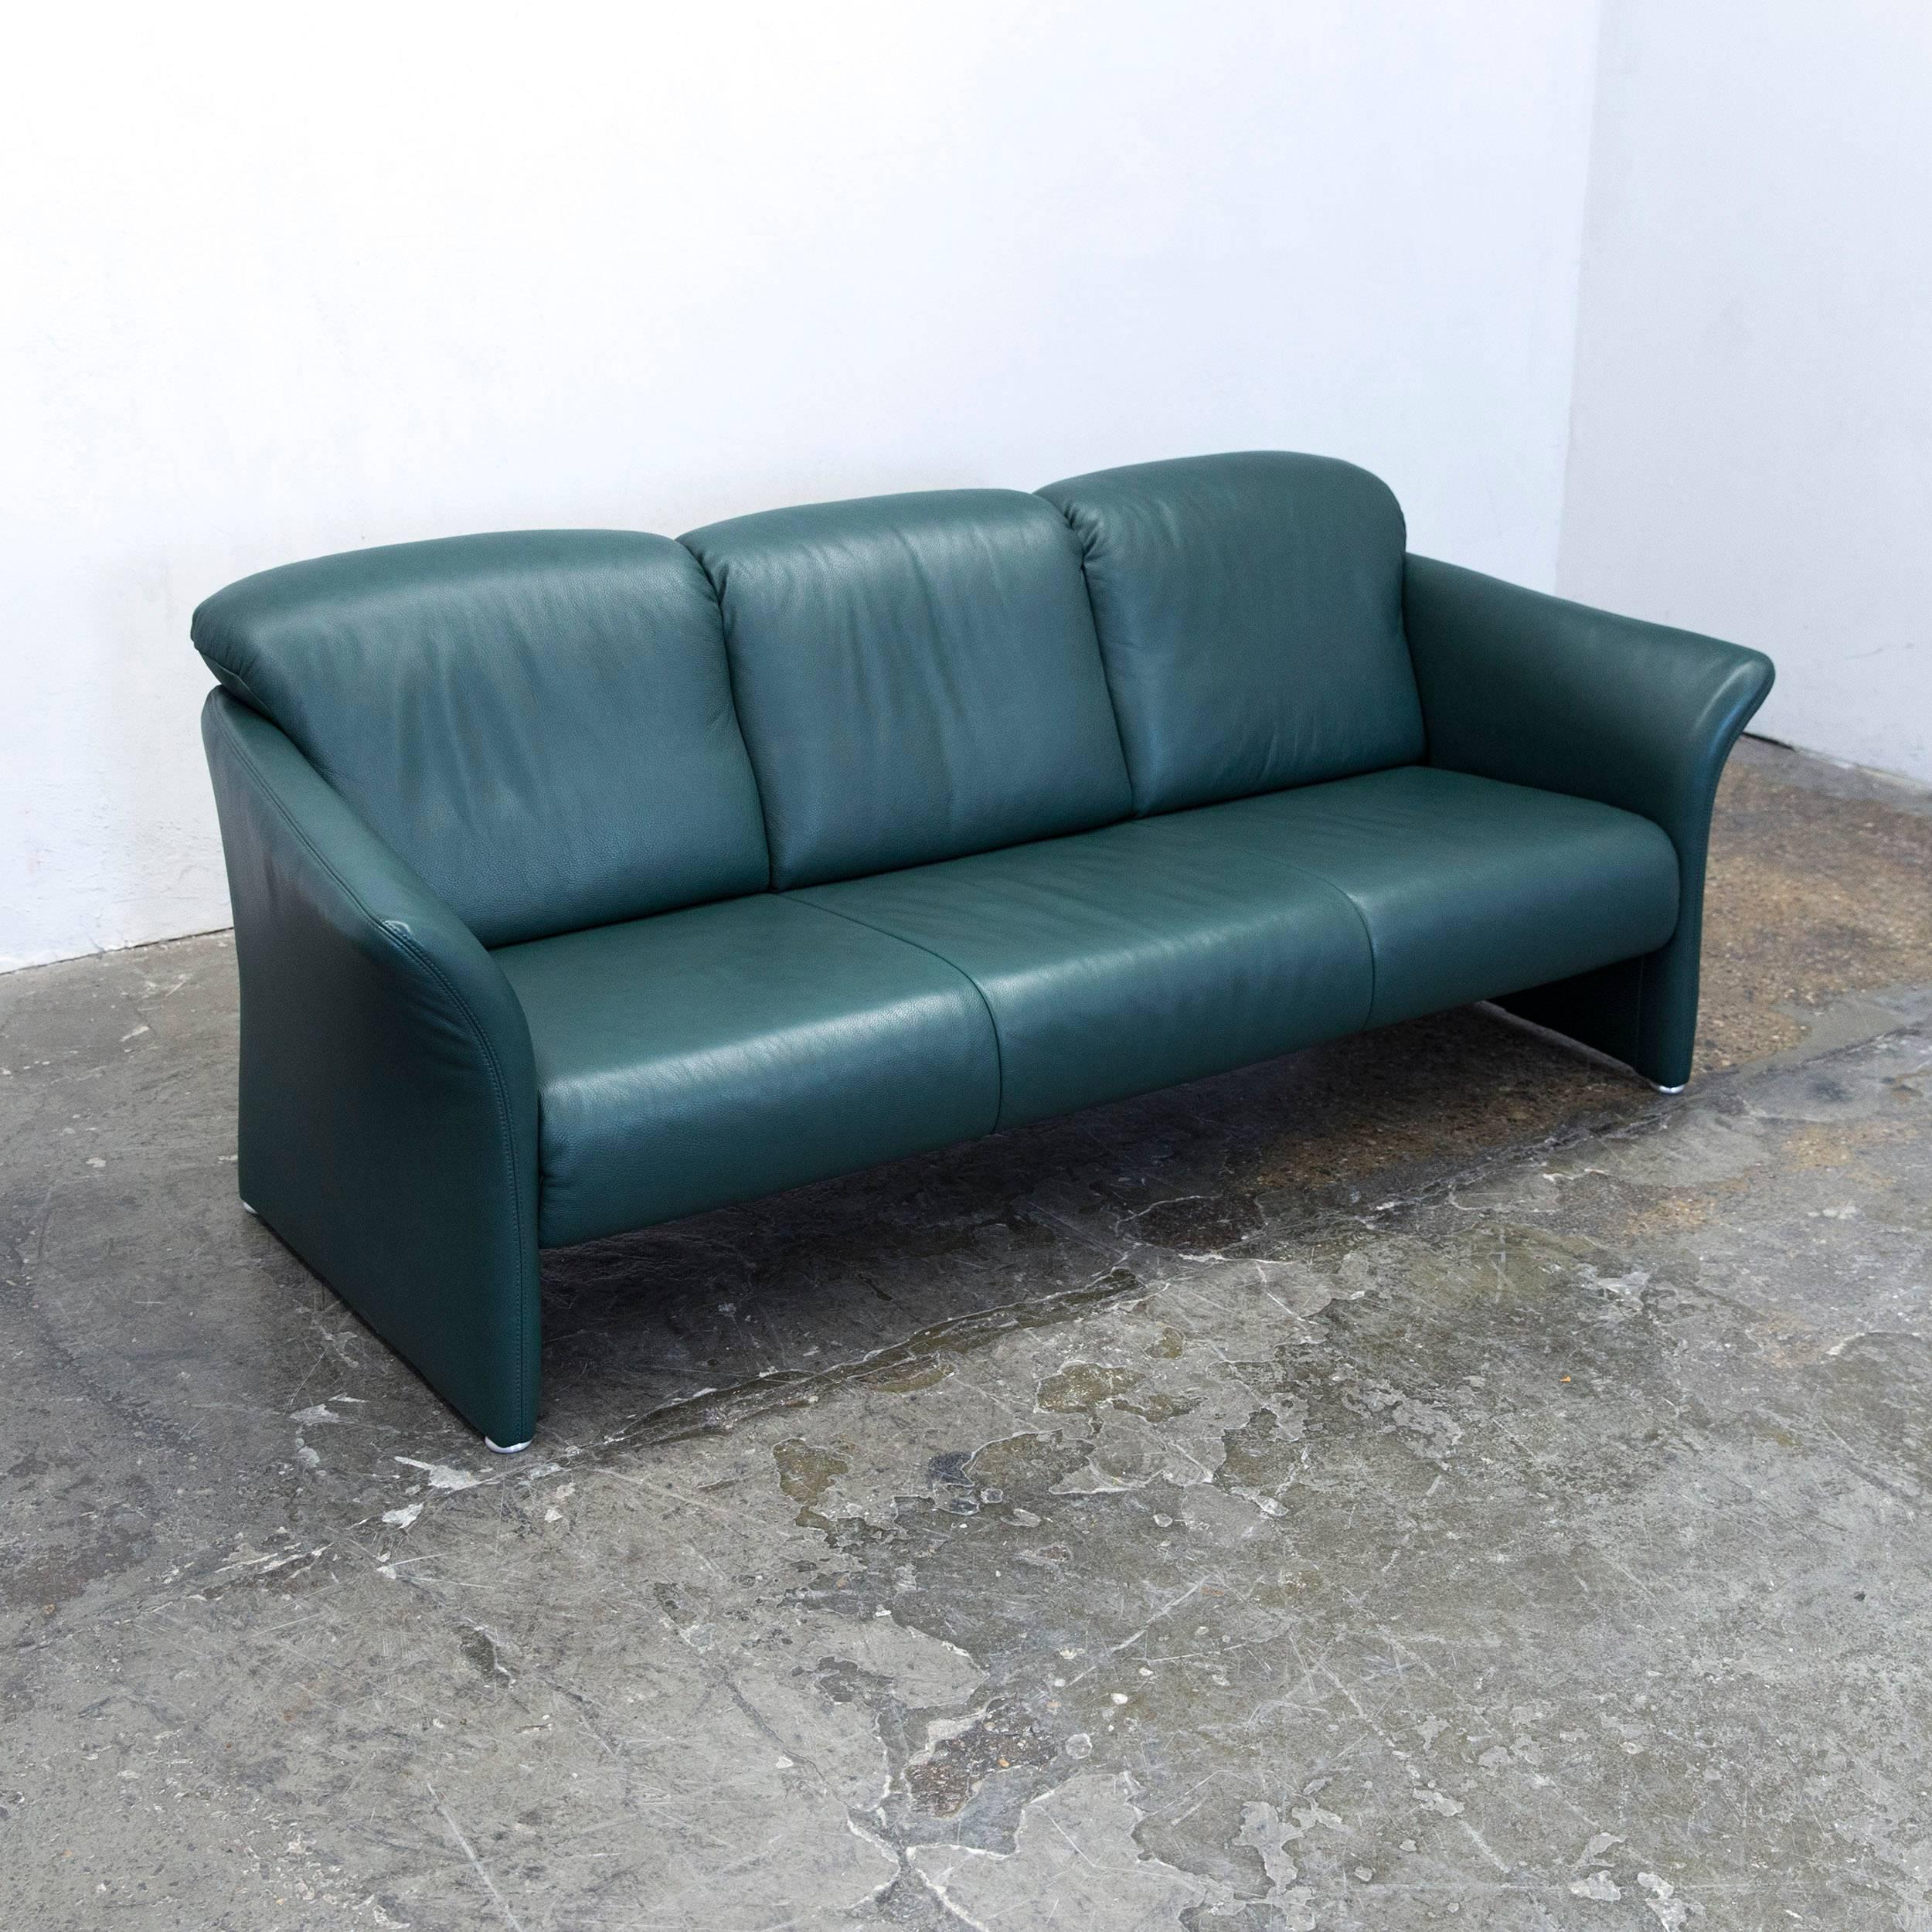 German Koinor Designer Sofa Set Leather Green Three-Seat Couch Modern